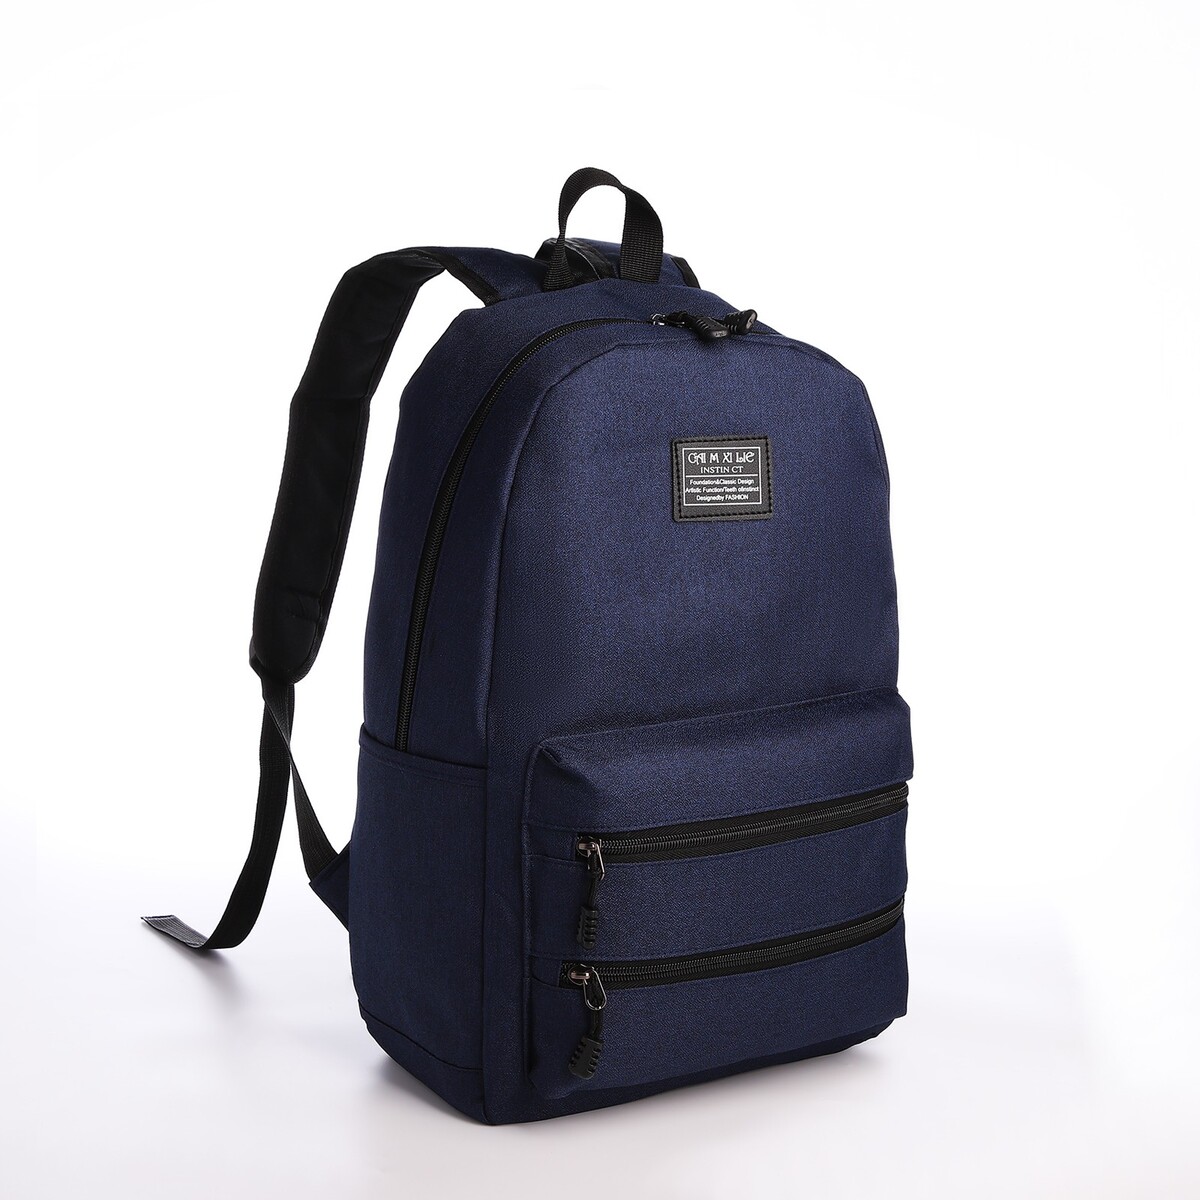 Рюкзак молодежный из текстиля на молнии, usb, 5 карманов, цвет синий